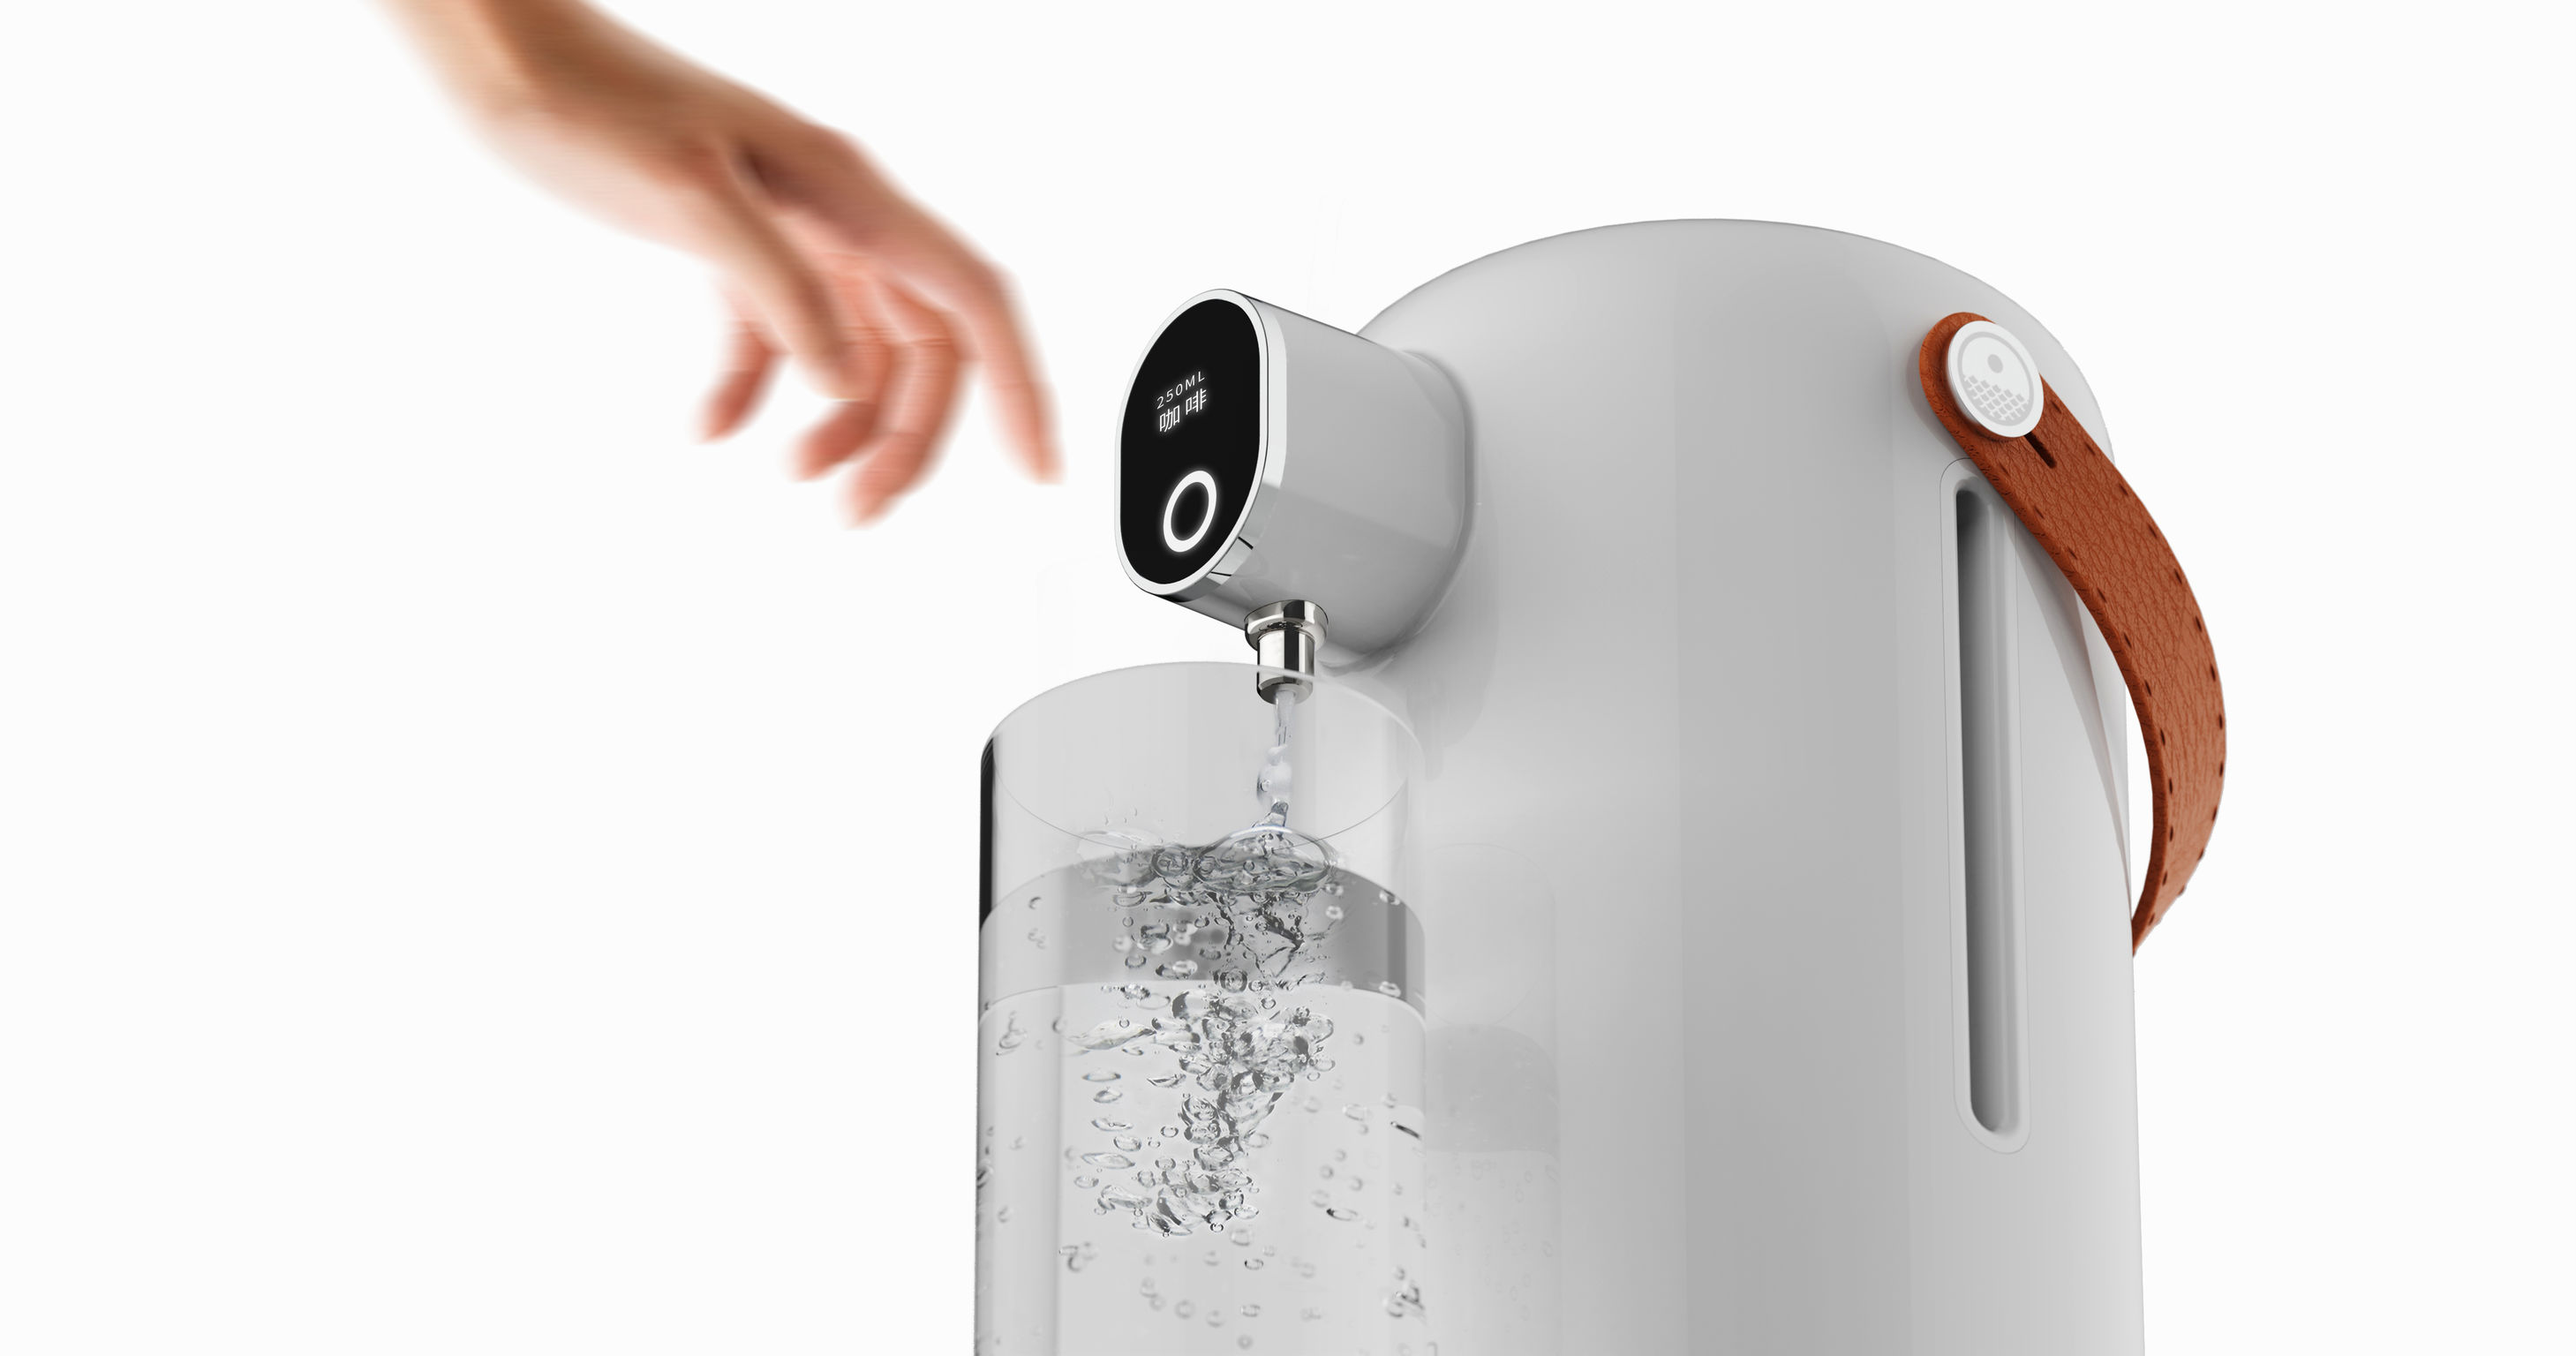 iF Design - Smart Instant Hot Water Dispenser